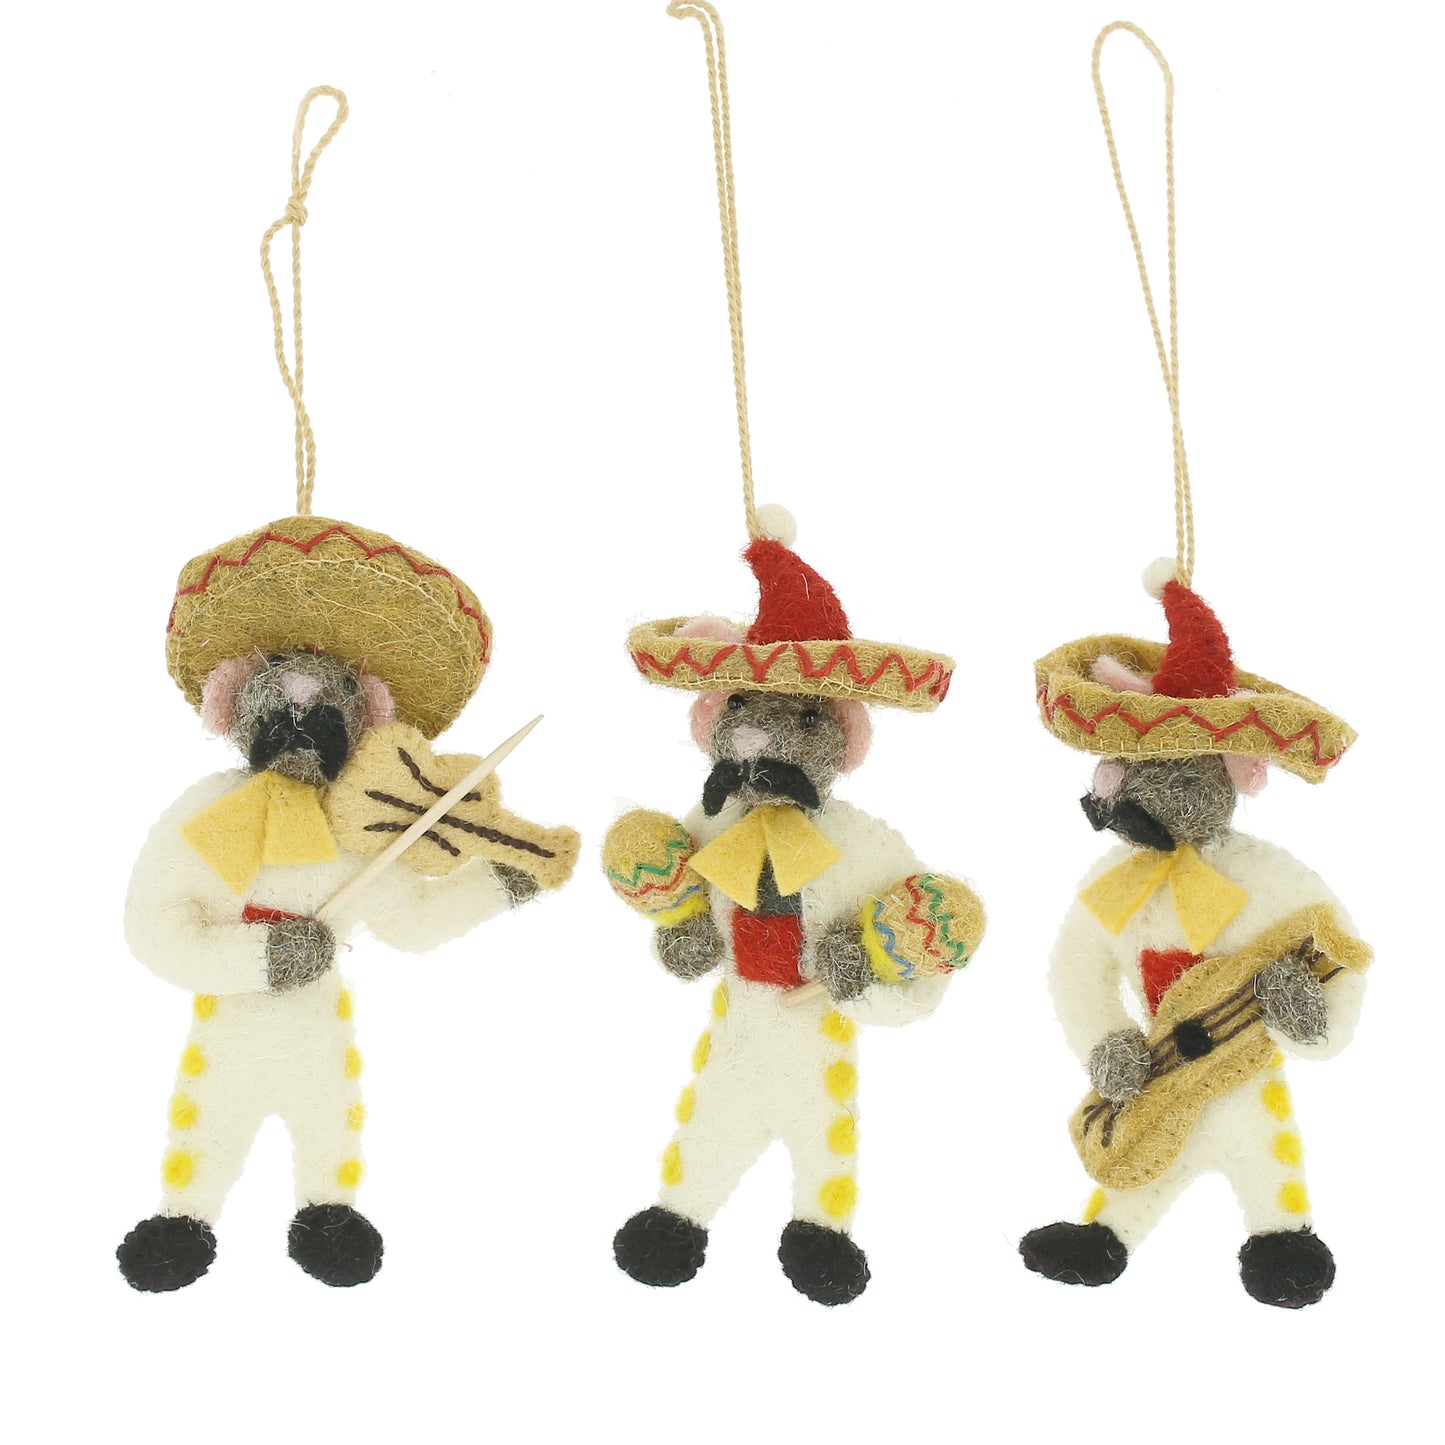 Mariachi Band Decorations - Set of 3